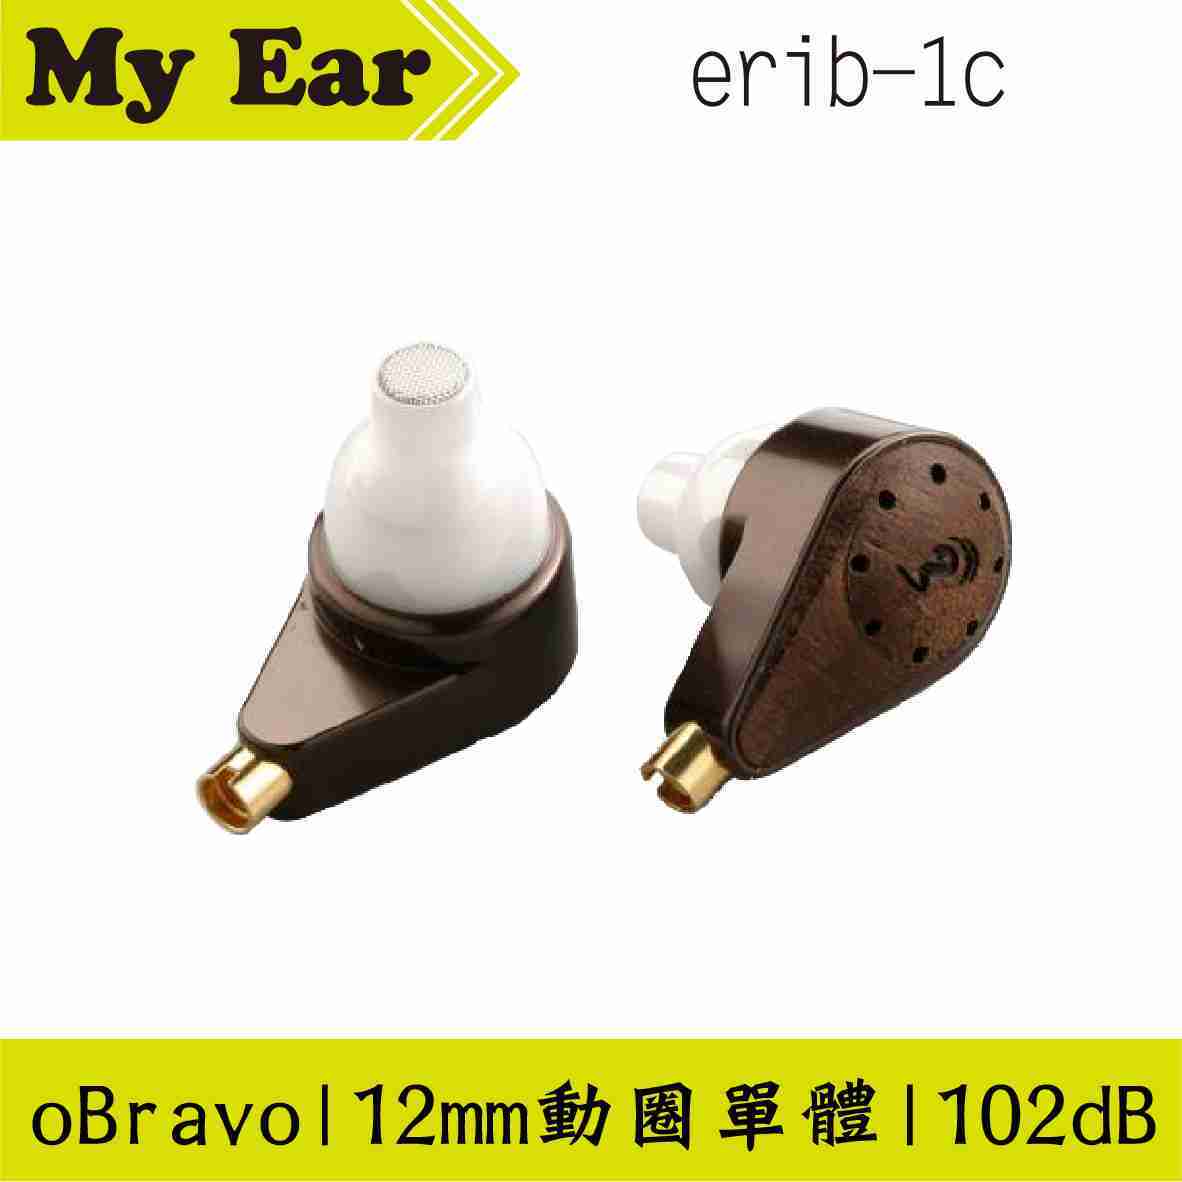 oBravo erib-1c 平面振膜高音 耳道式耳機 | My Ear耳機專門店